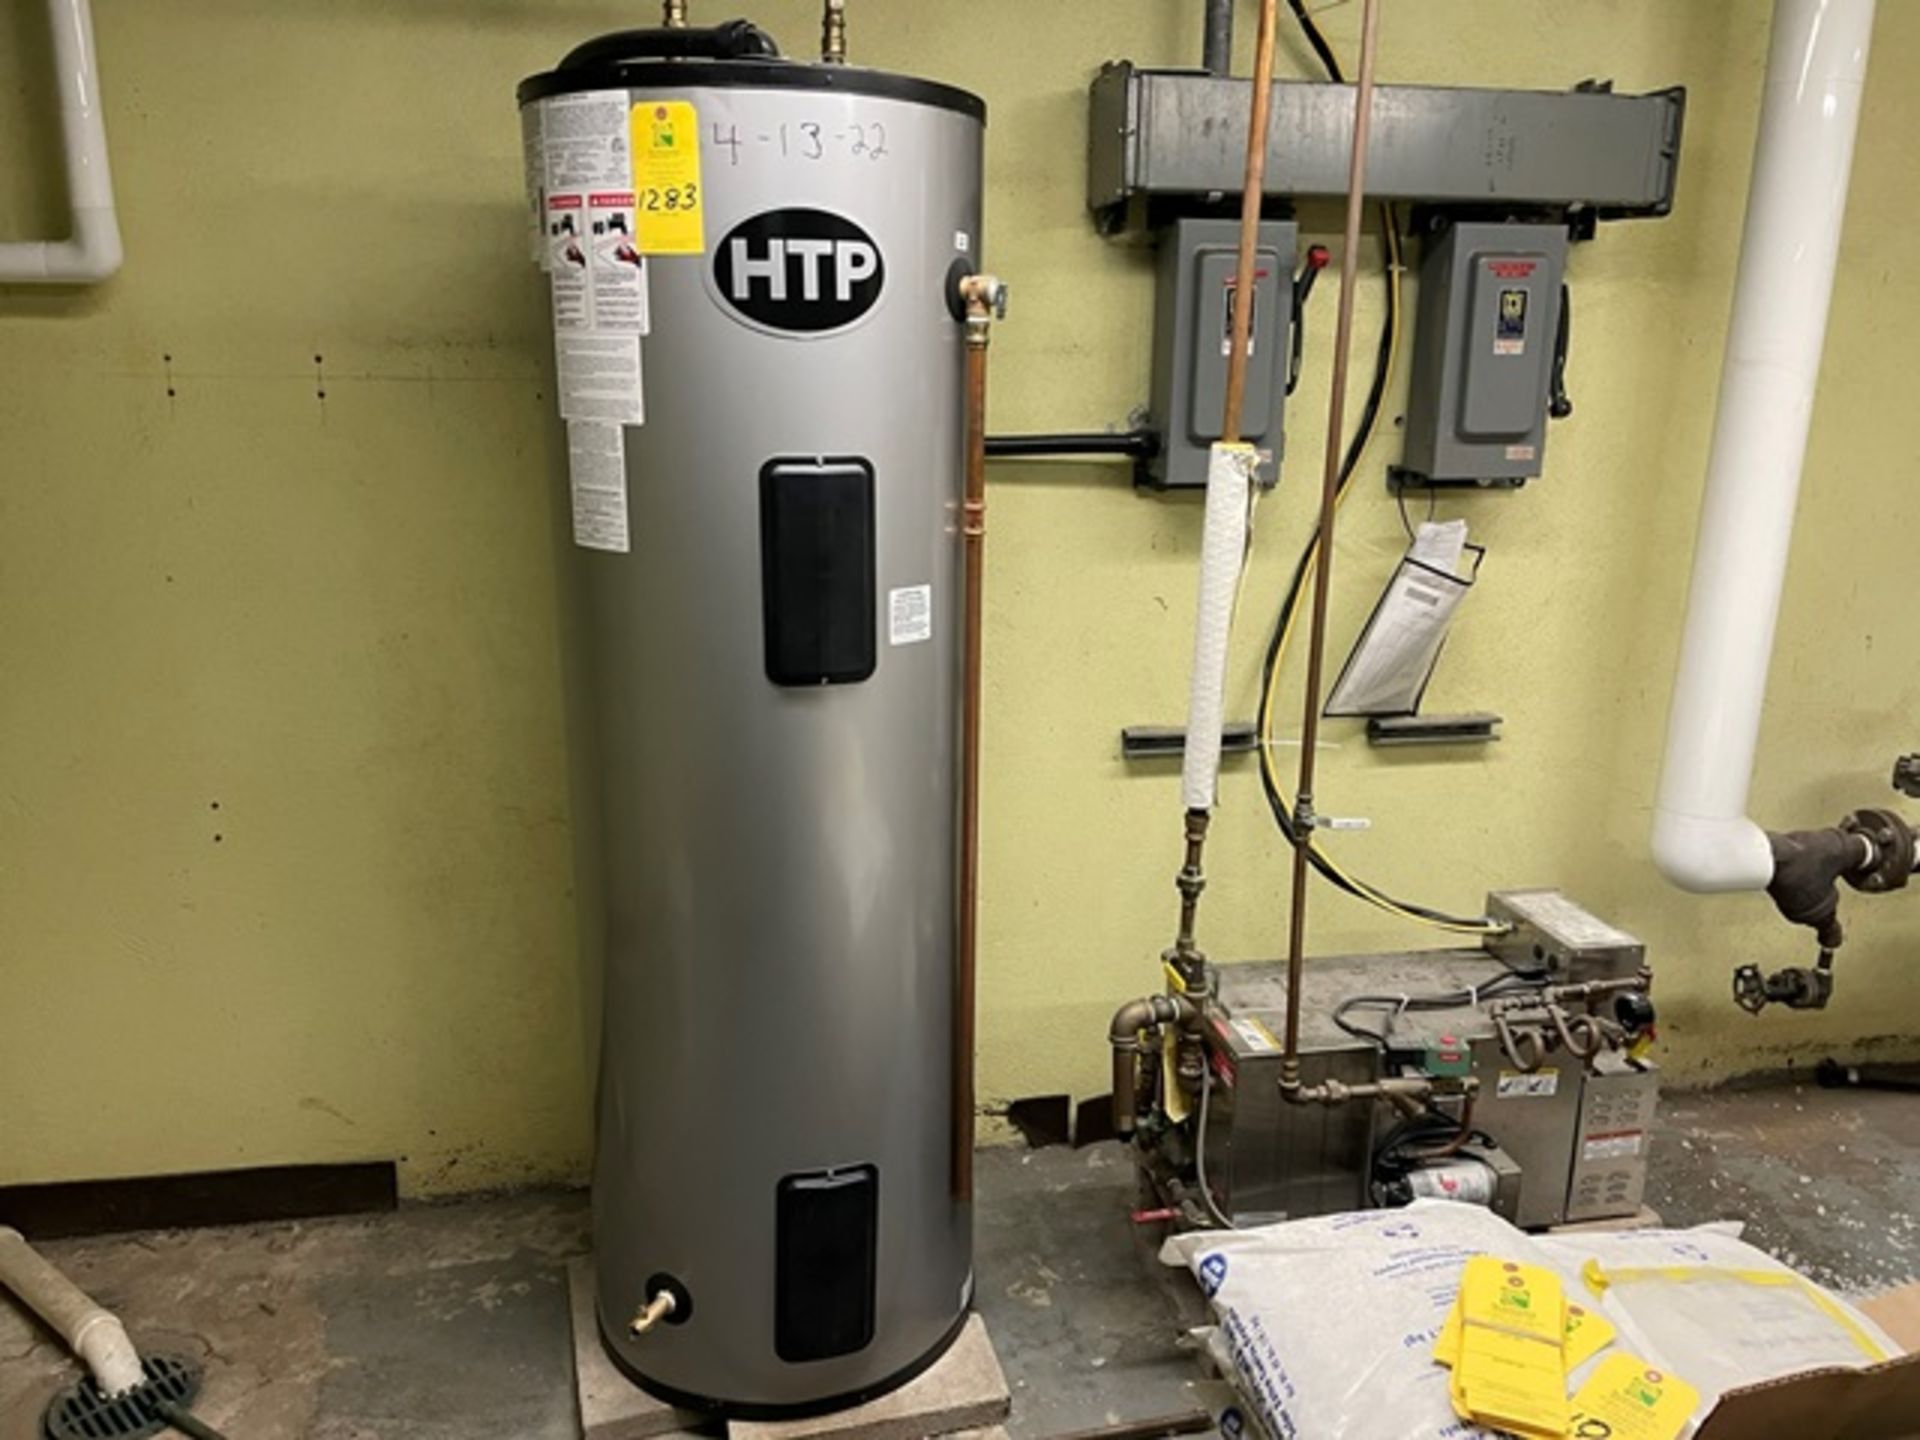 HTP Hot Water Heater